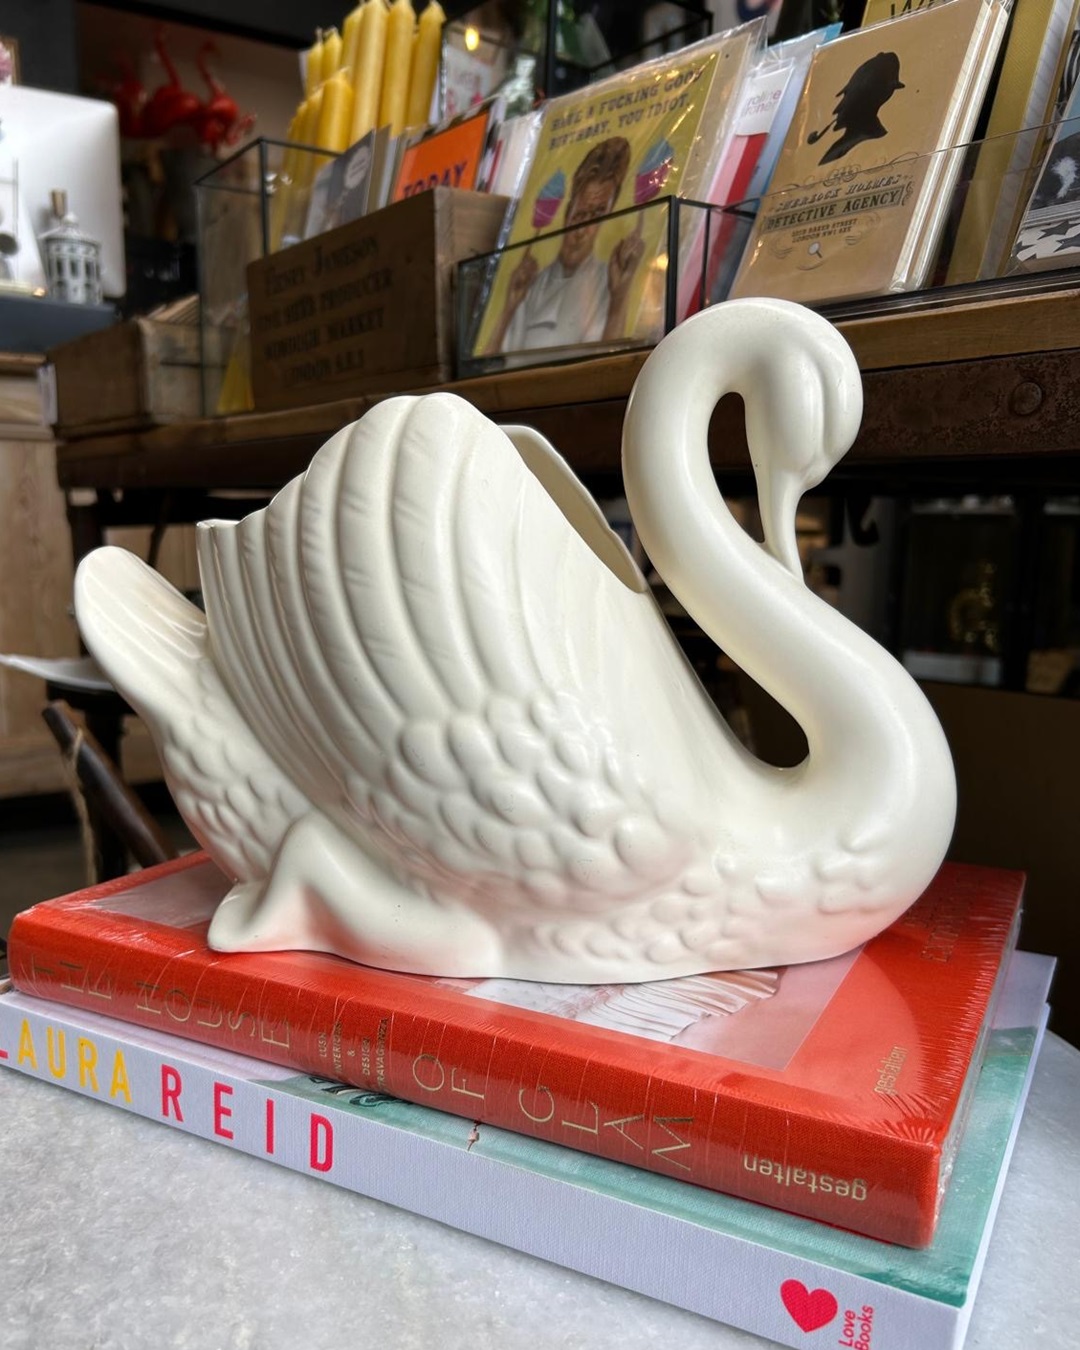 White swan ceramic on books